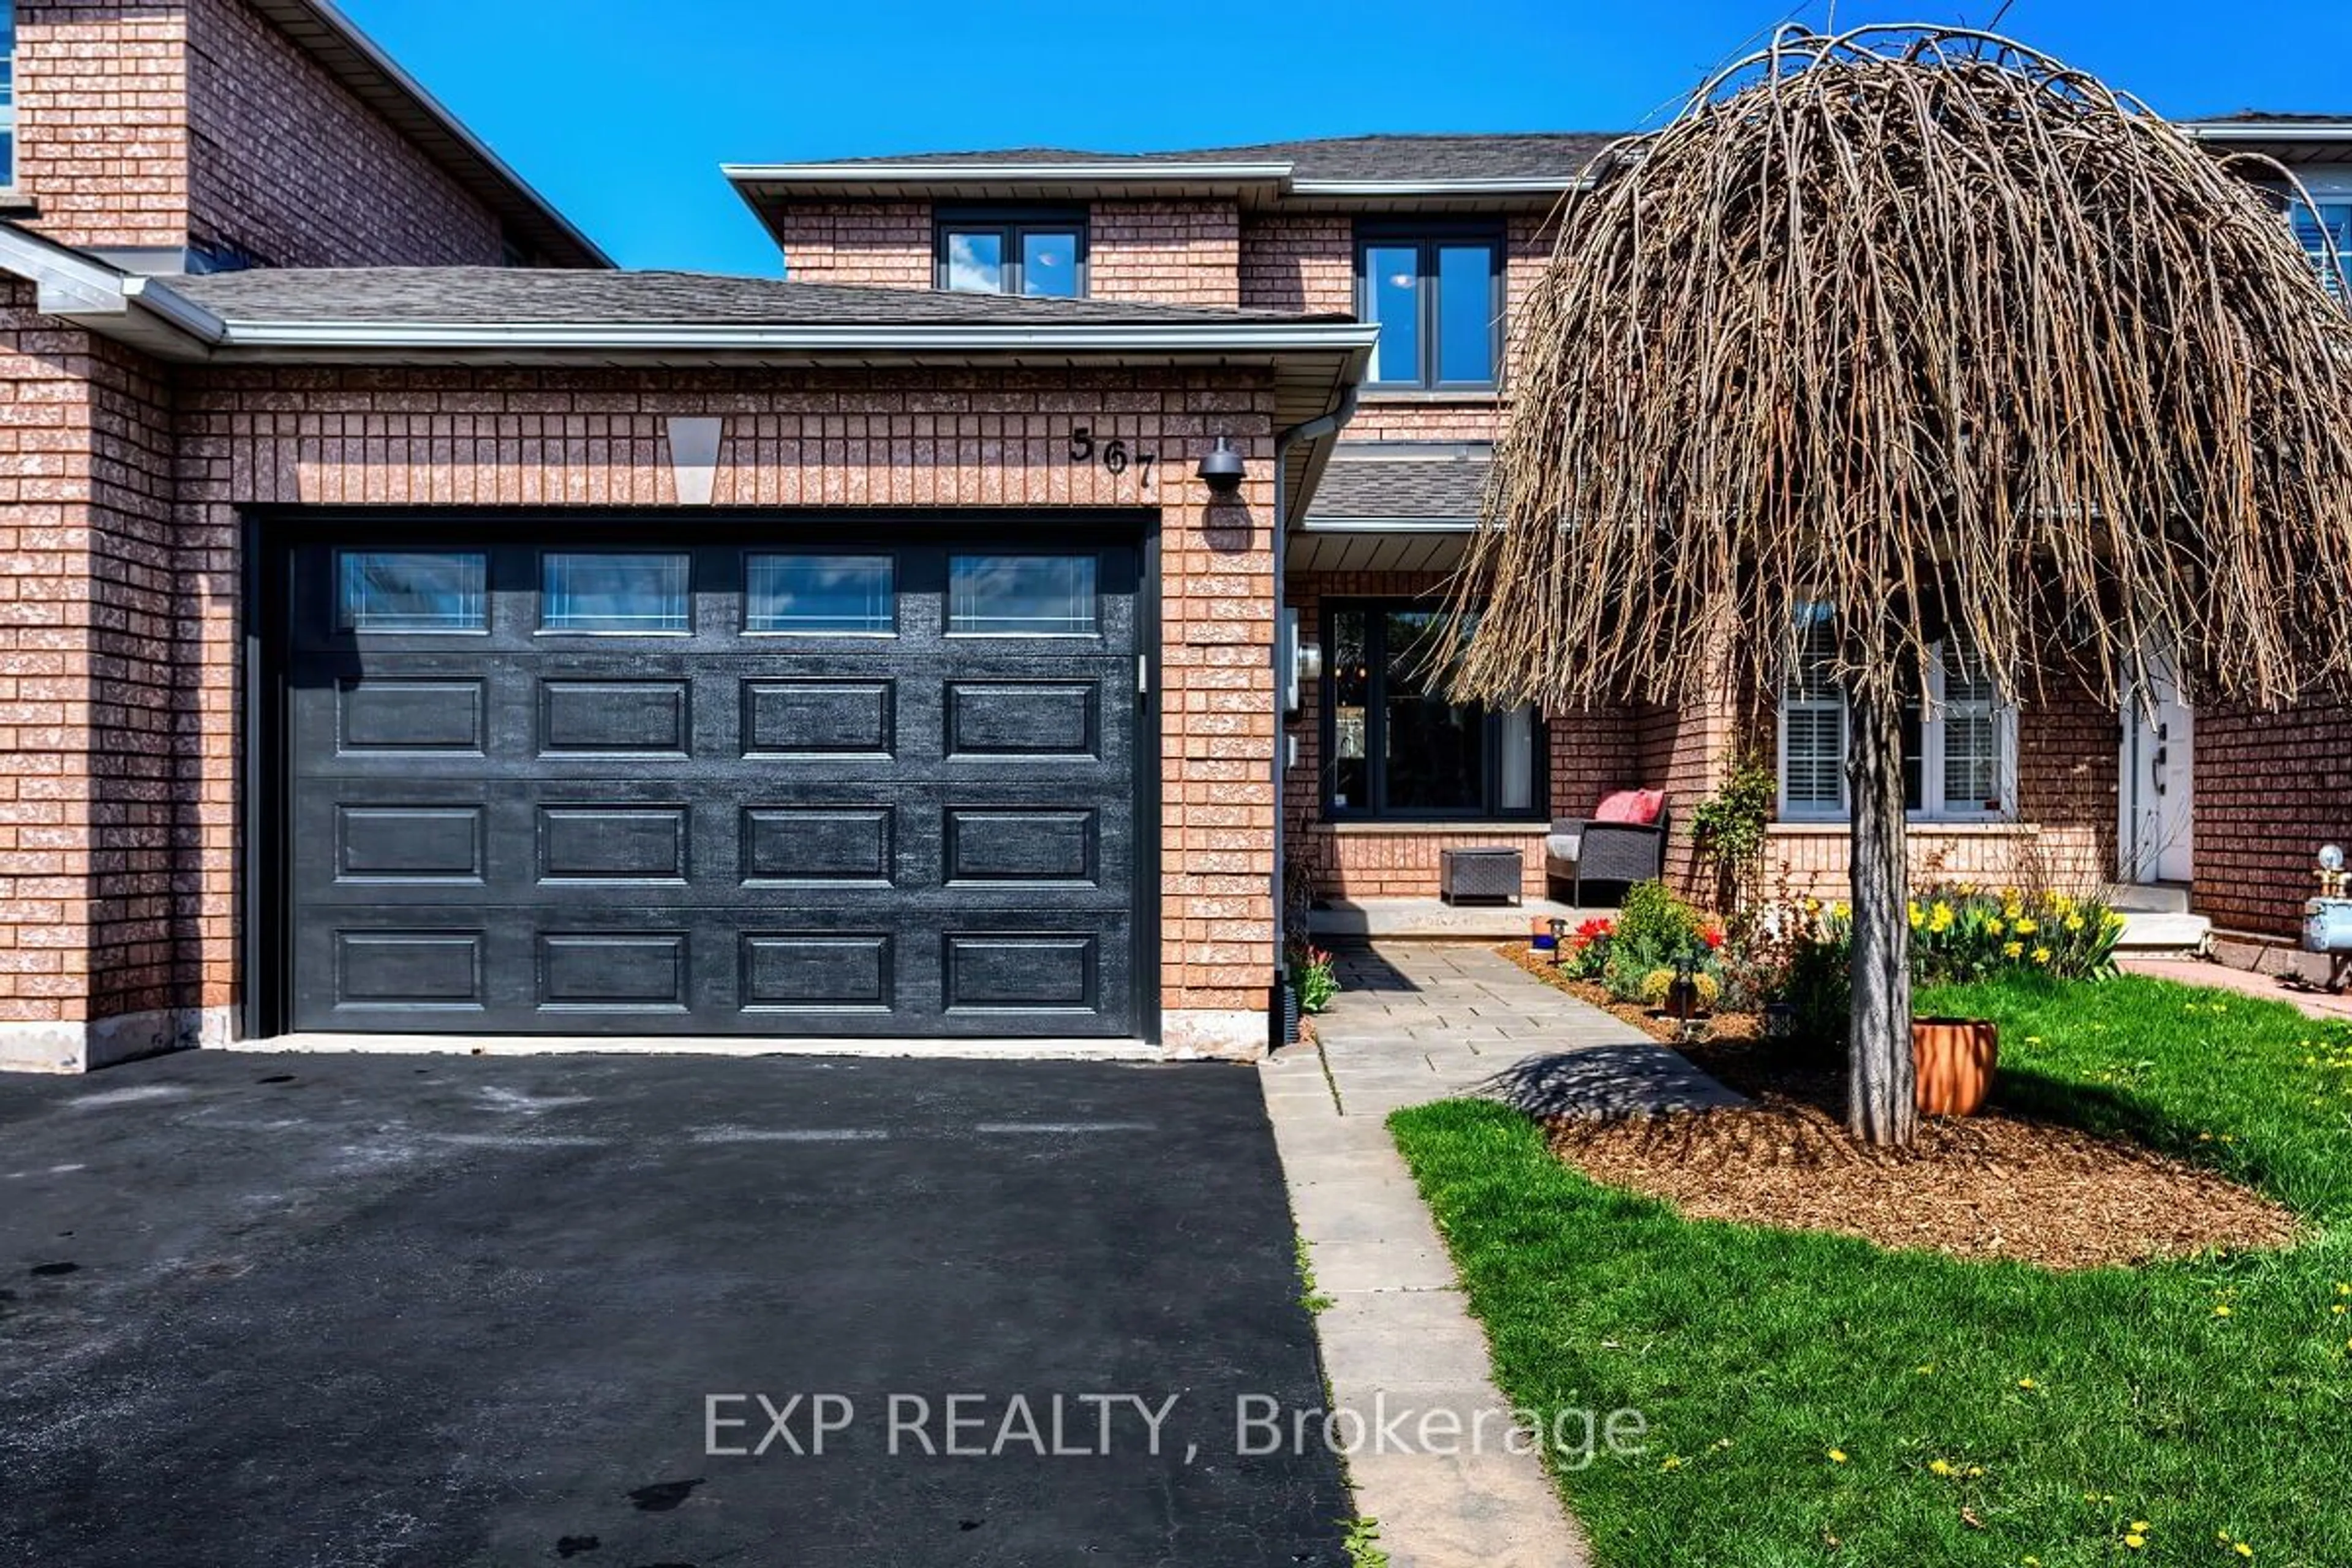 Home with brick exterior material for 567 Eliza Cres, Burlington Ontario L7L 6E2